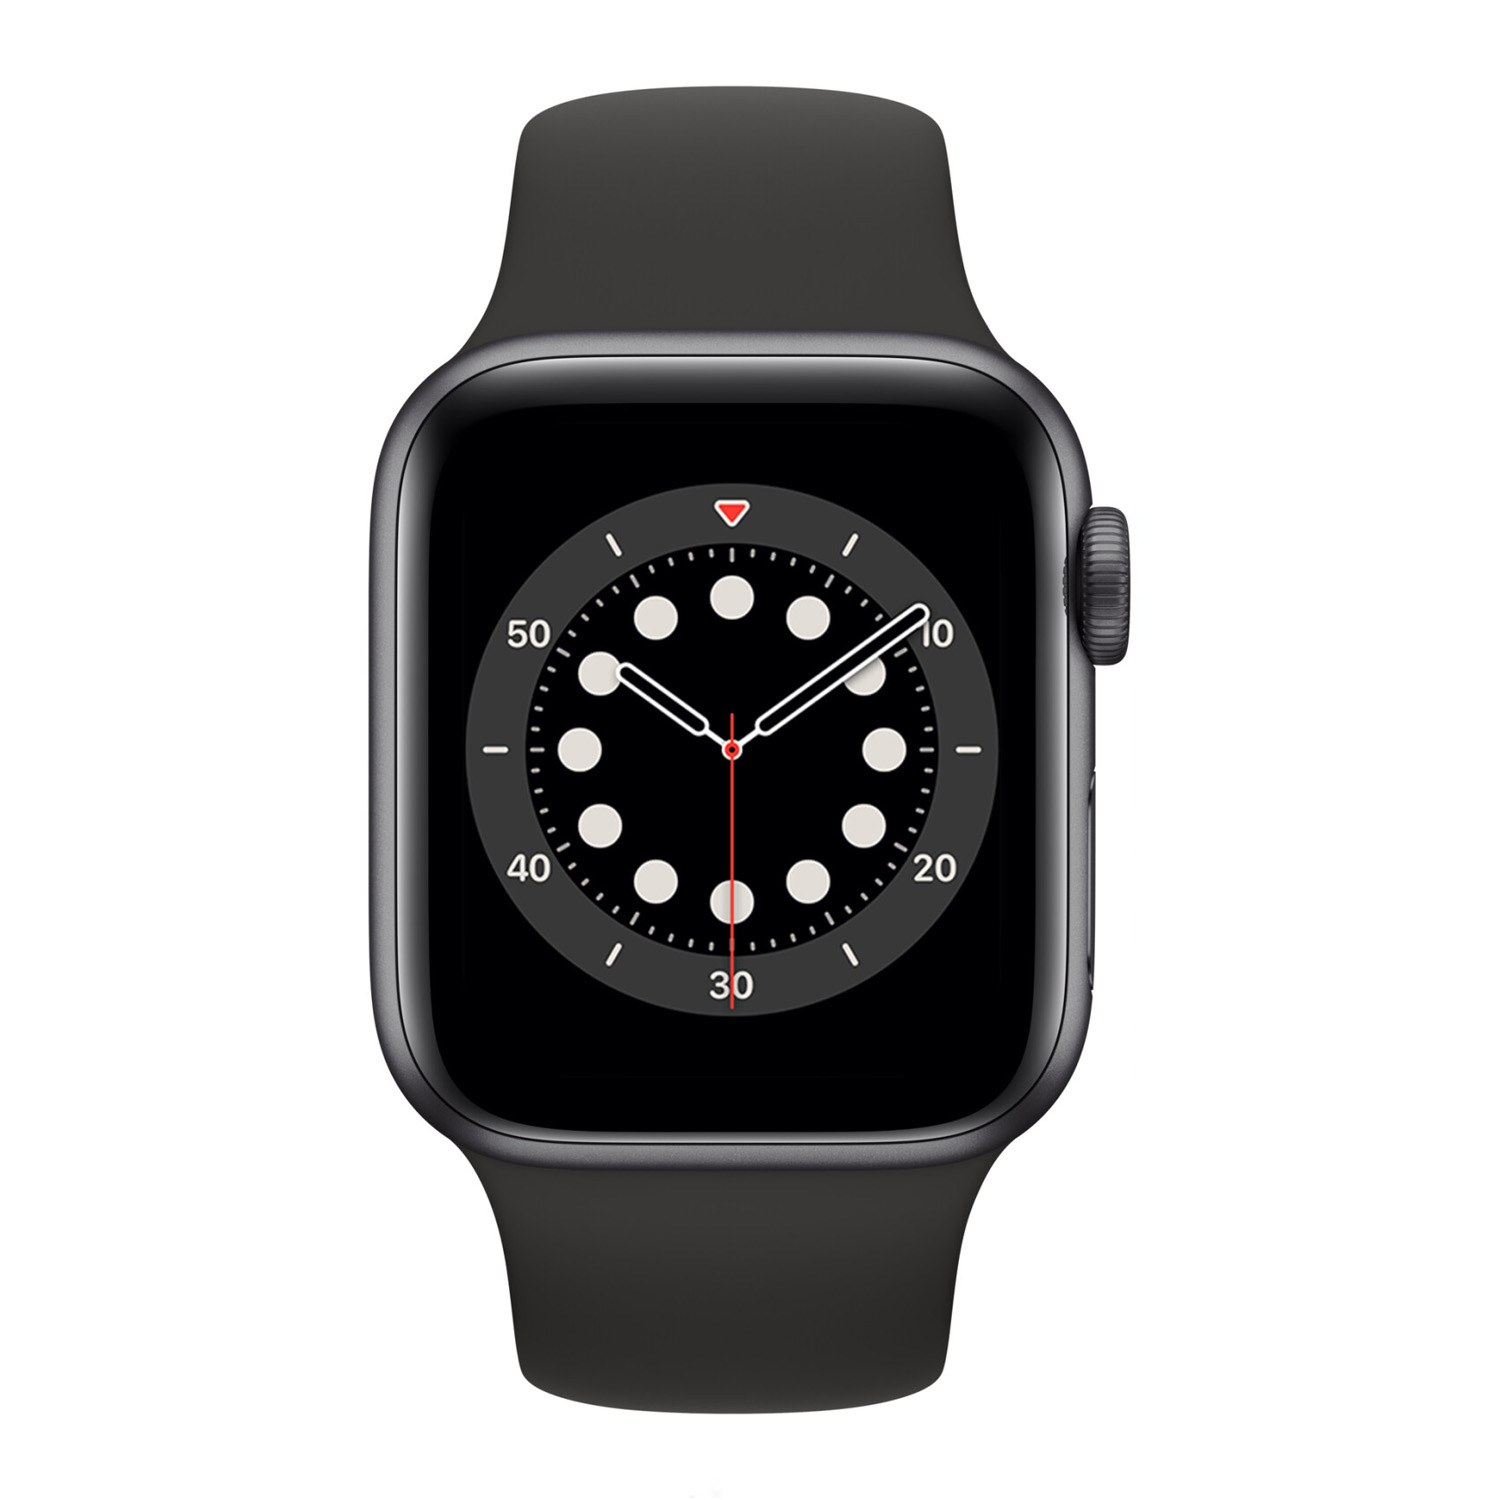 RP 1905 // Apple Watch S6 Aluminium 40mm Cellular SpaceGrau (Sportarmband schwarz)